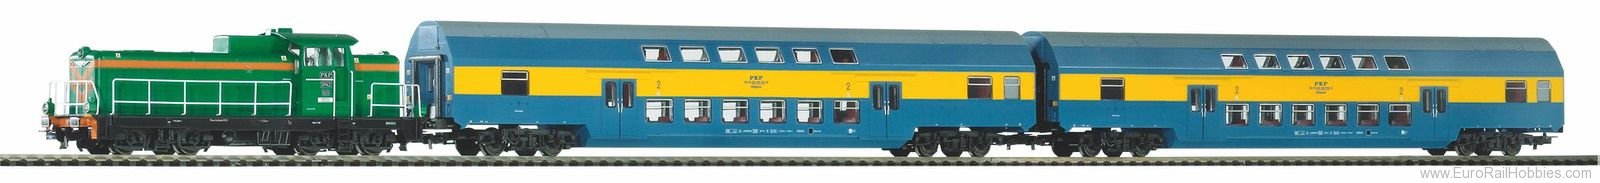 Piko 97934 Starter Set PKP SM42 Diesel loco w. 2 Bi-leve